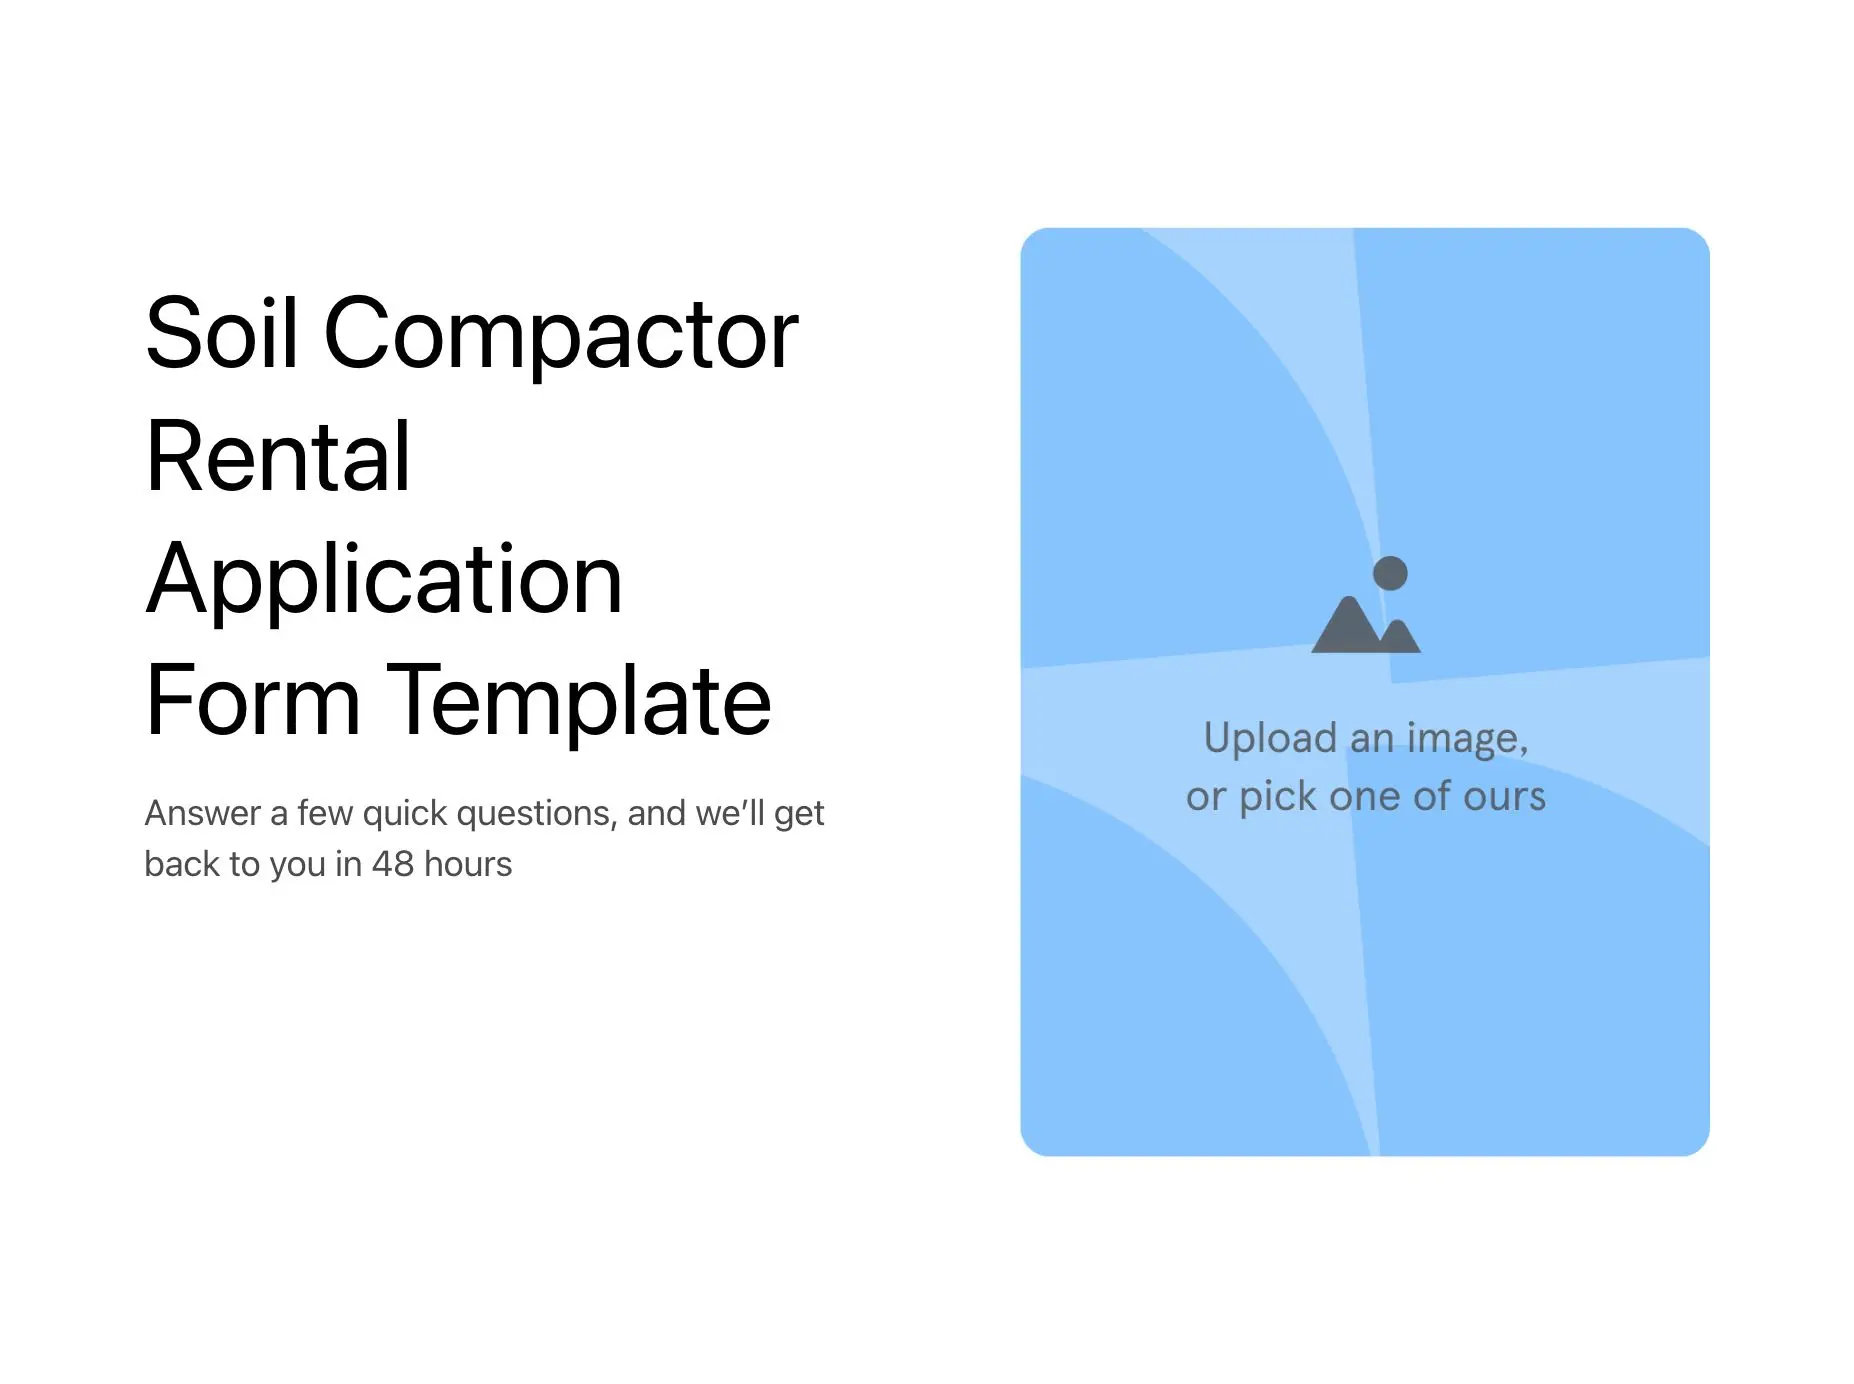 Soil Compactor Rental Application Form Template Hero